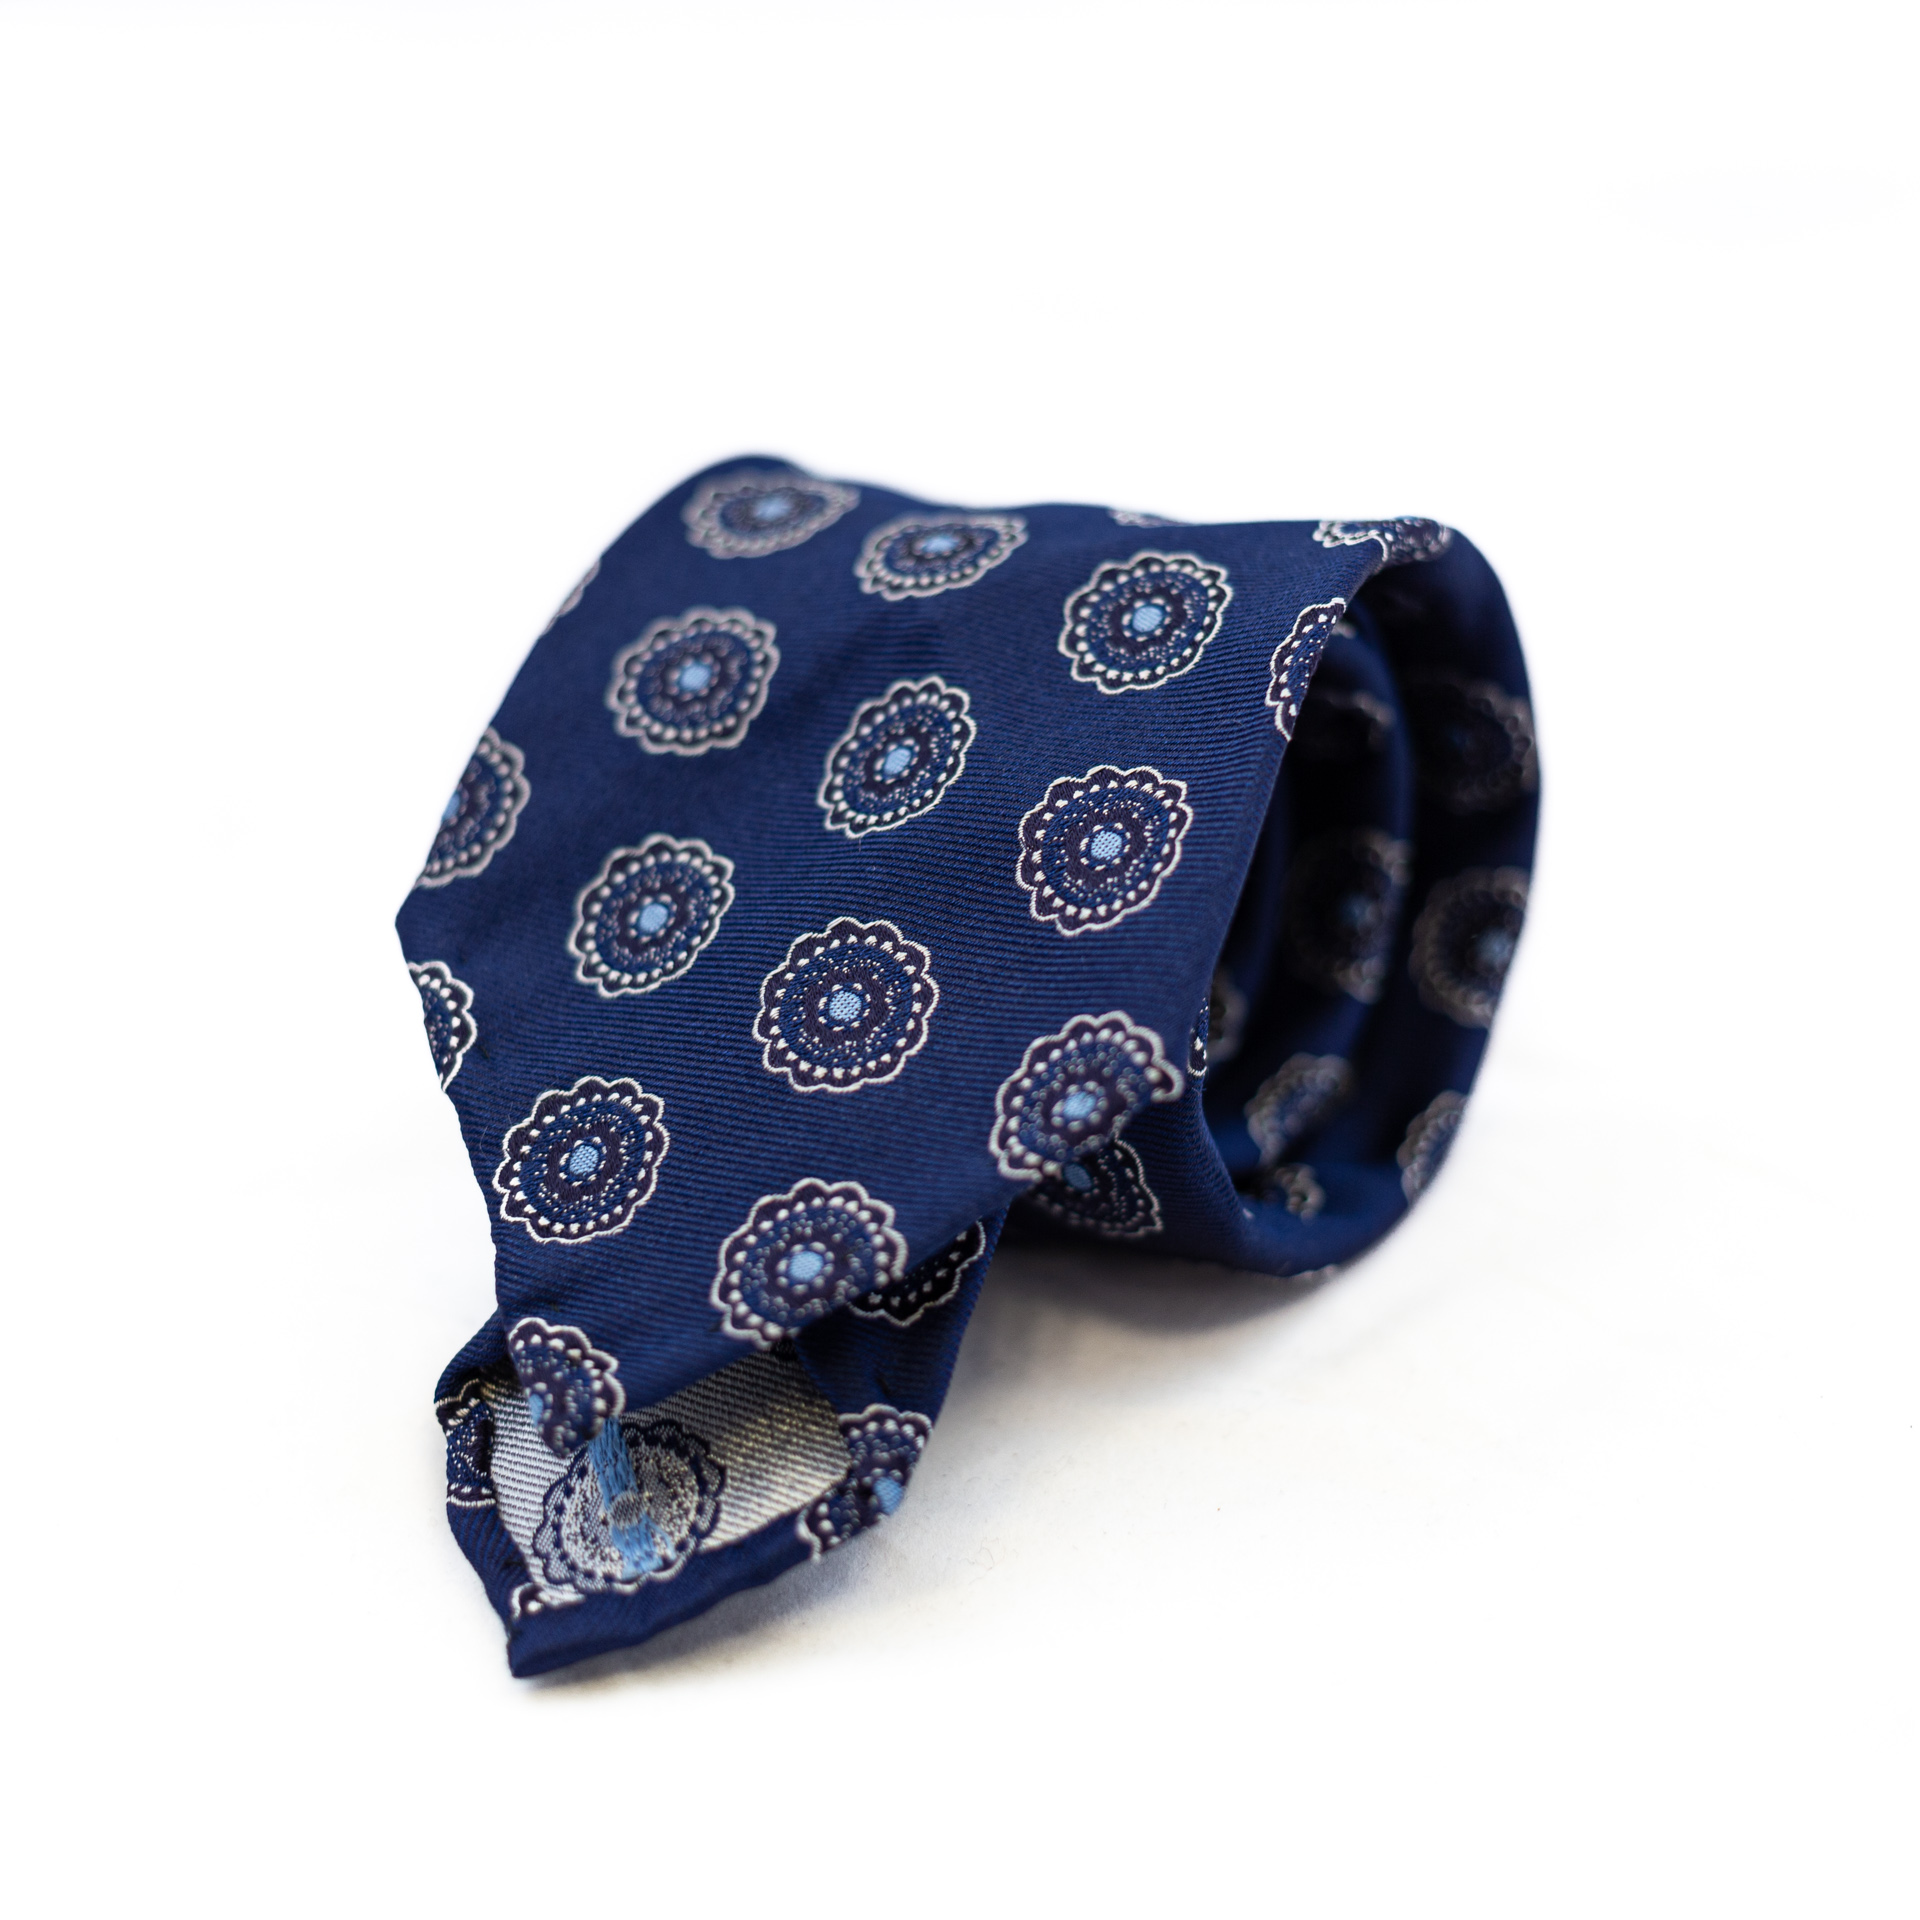 Blue 5-fold floral print silk tie folded